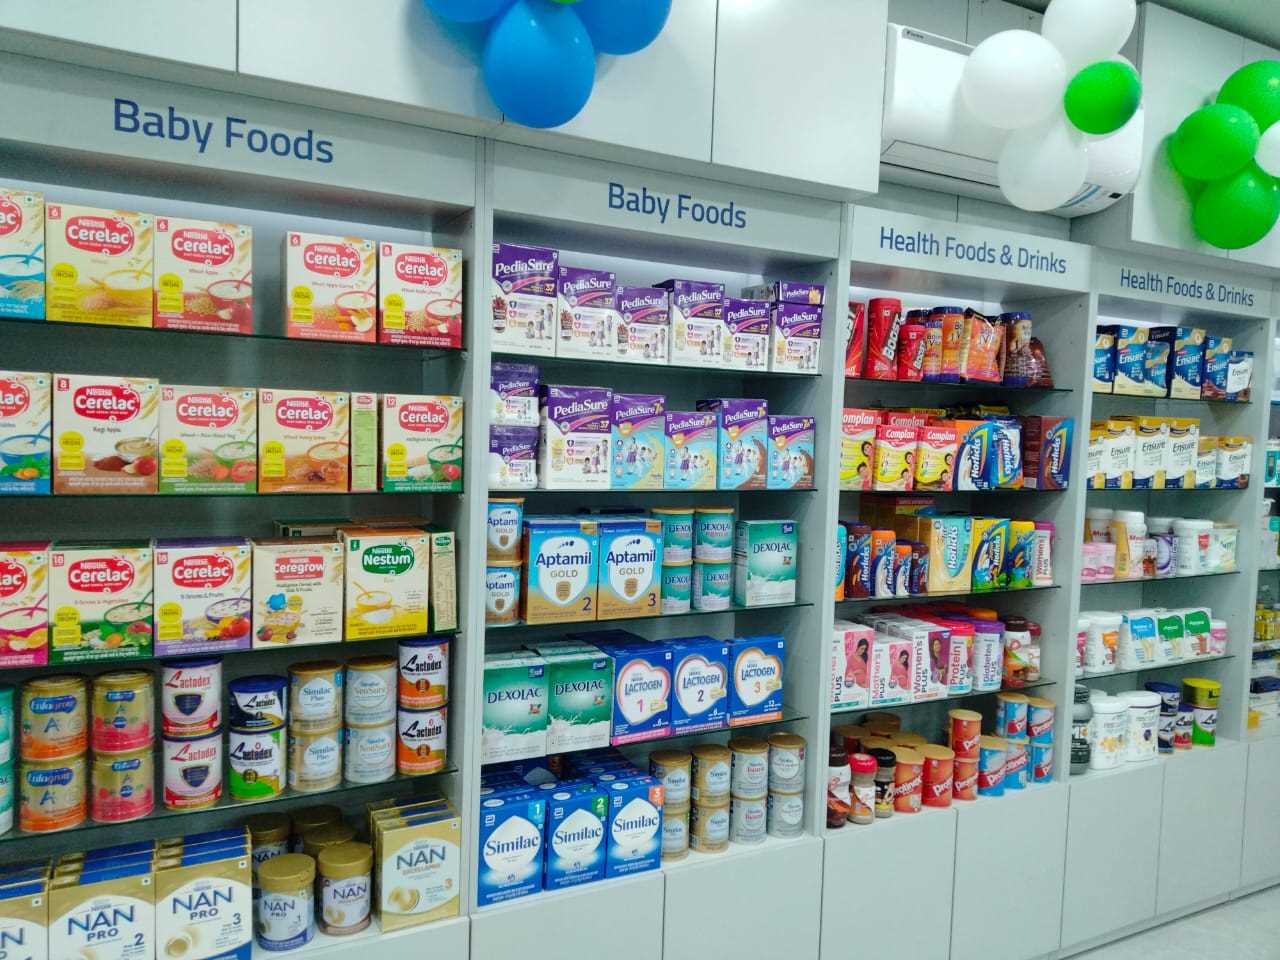 Aster Pharmacy in Abhishek Circle, Mysore